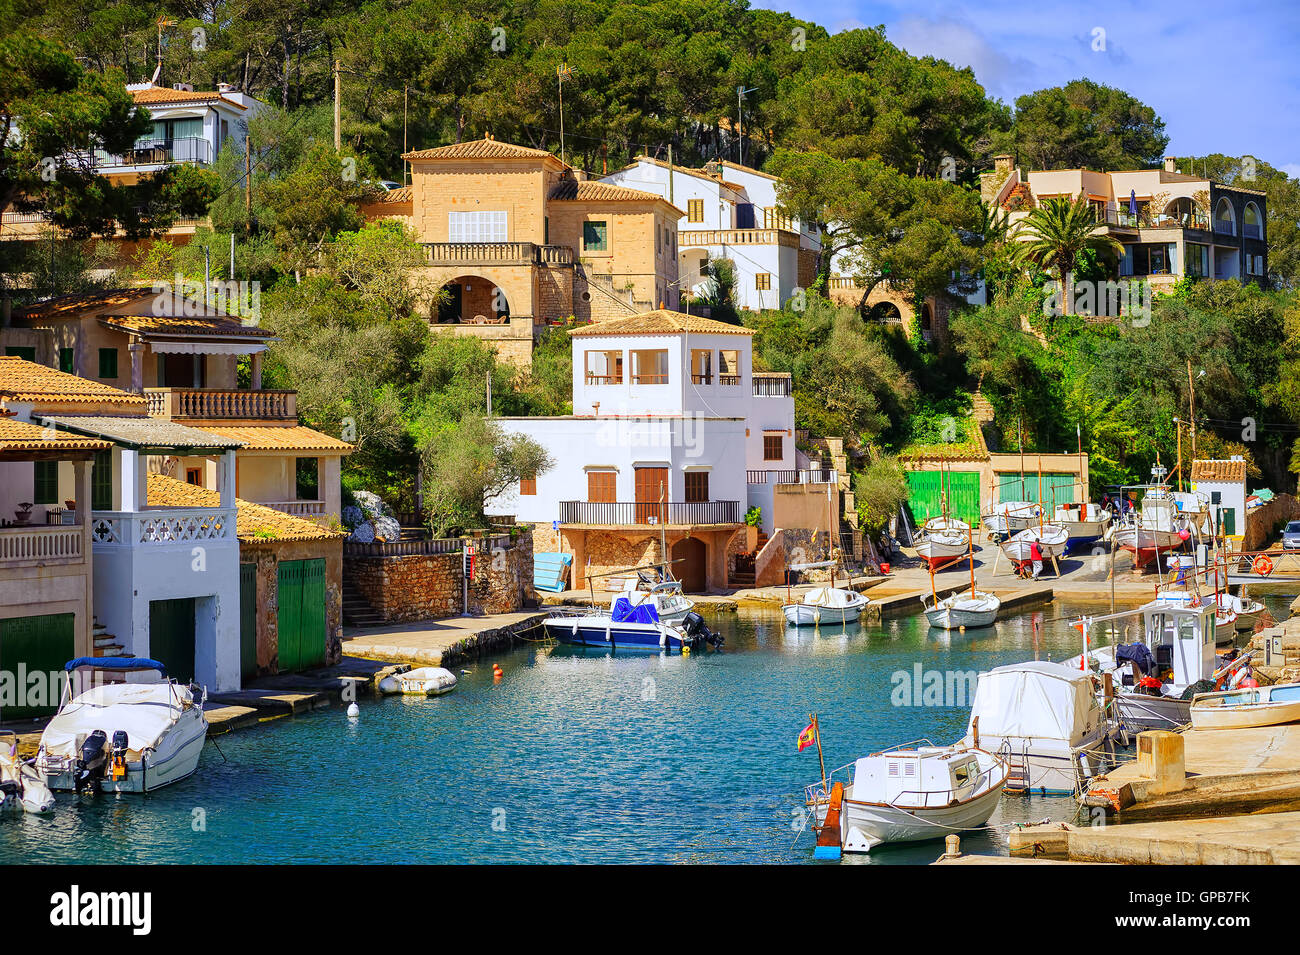 Cala Figuera, attractive little town on southern coast of Mallorca island, Spain Stock Photo